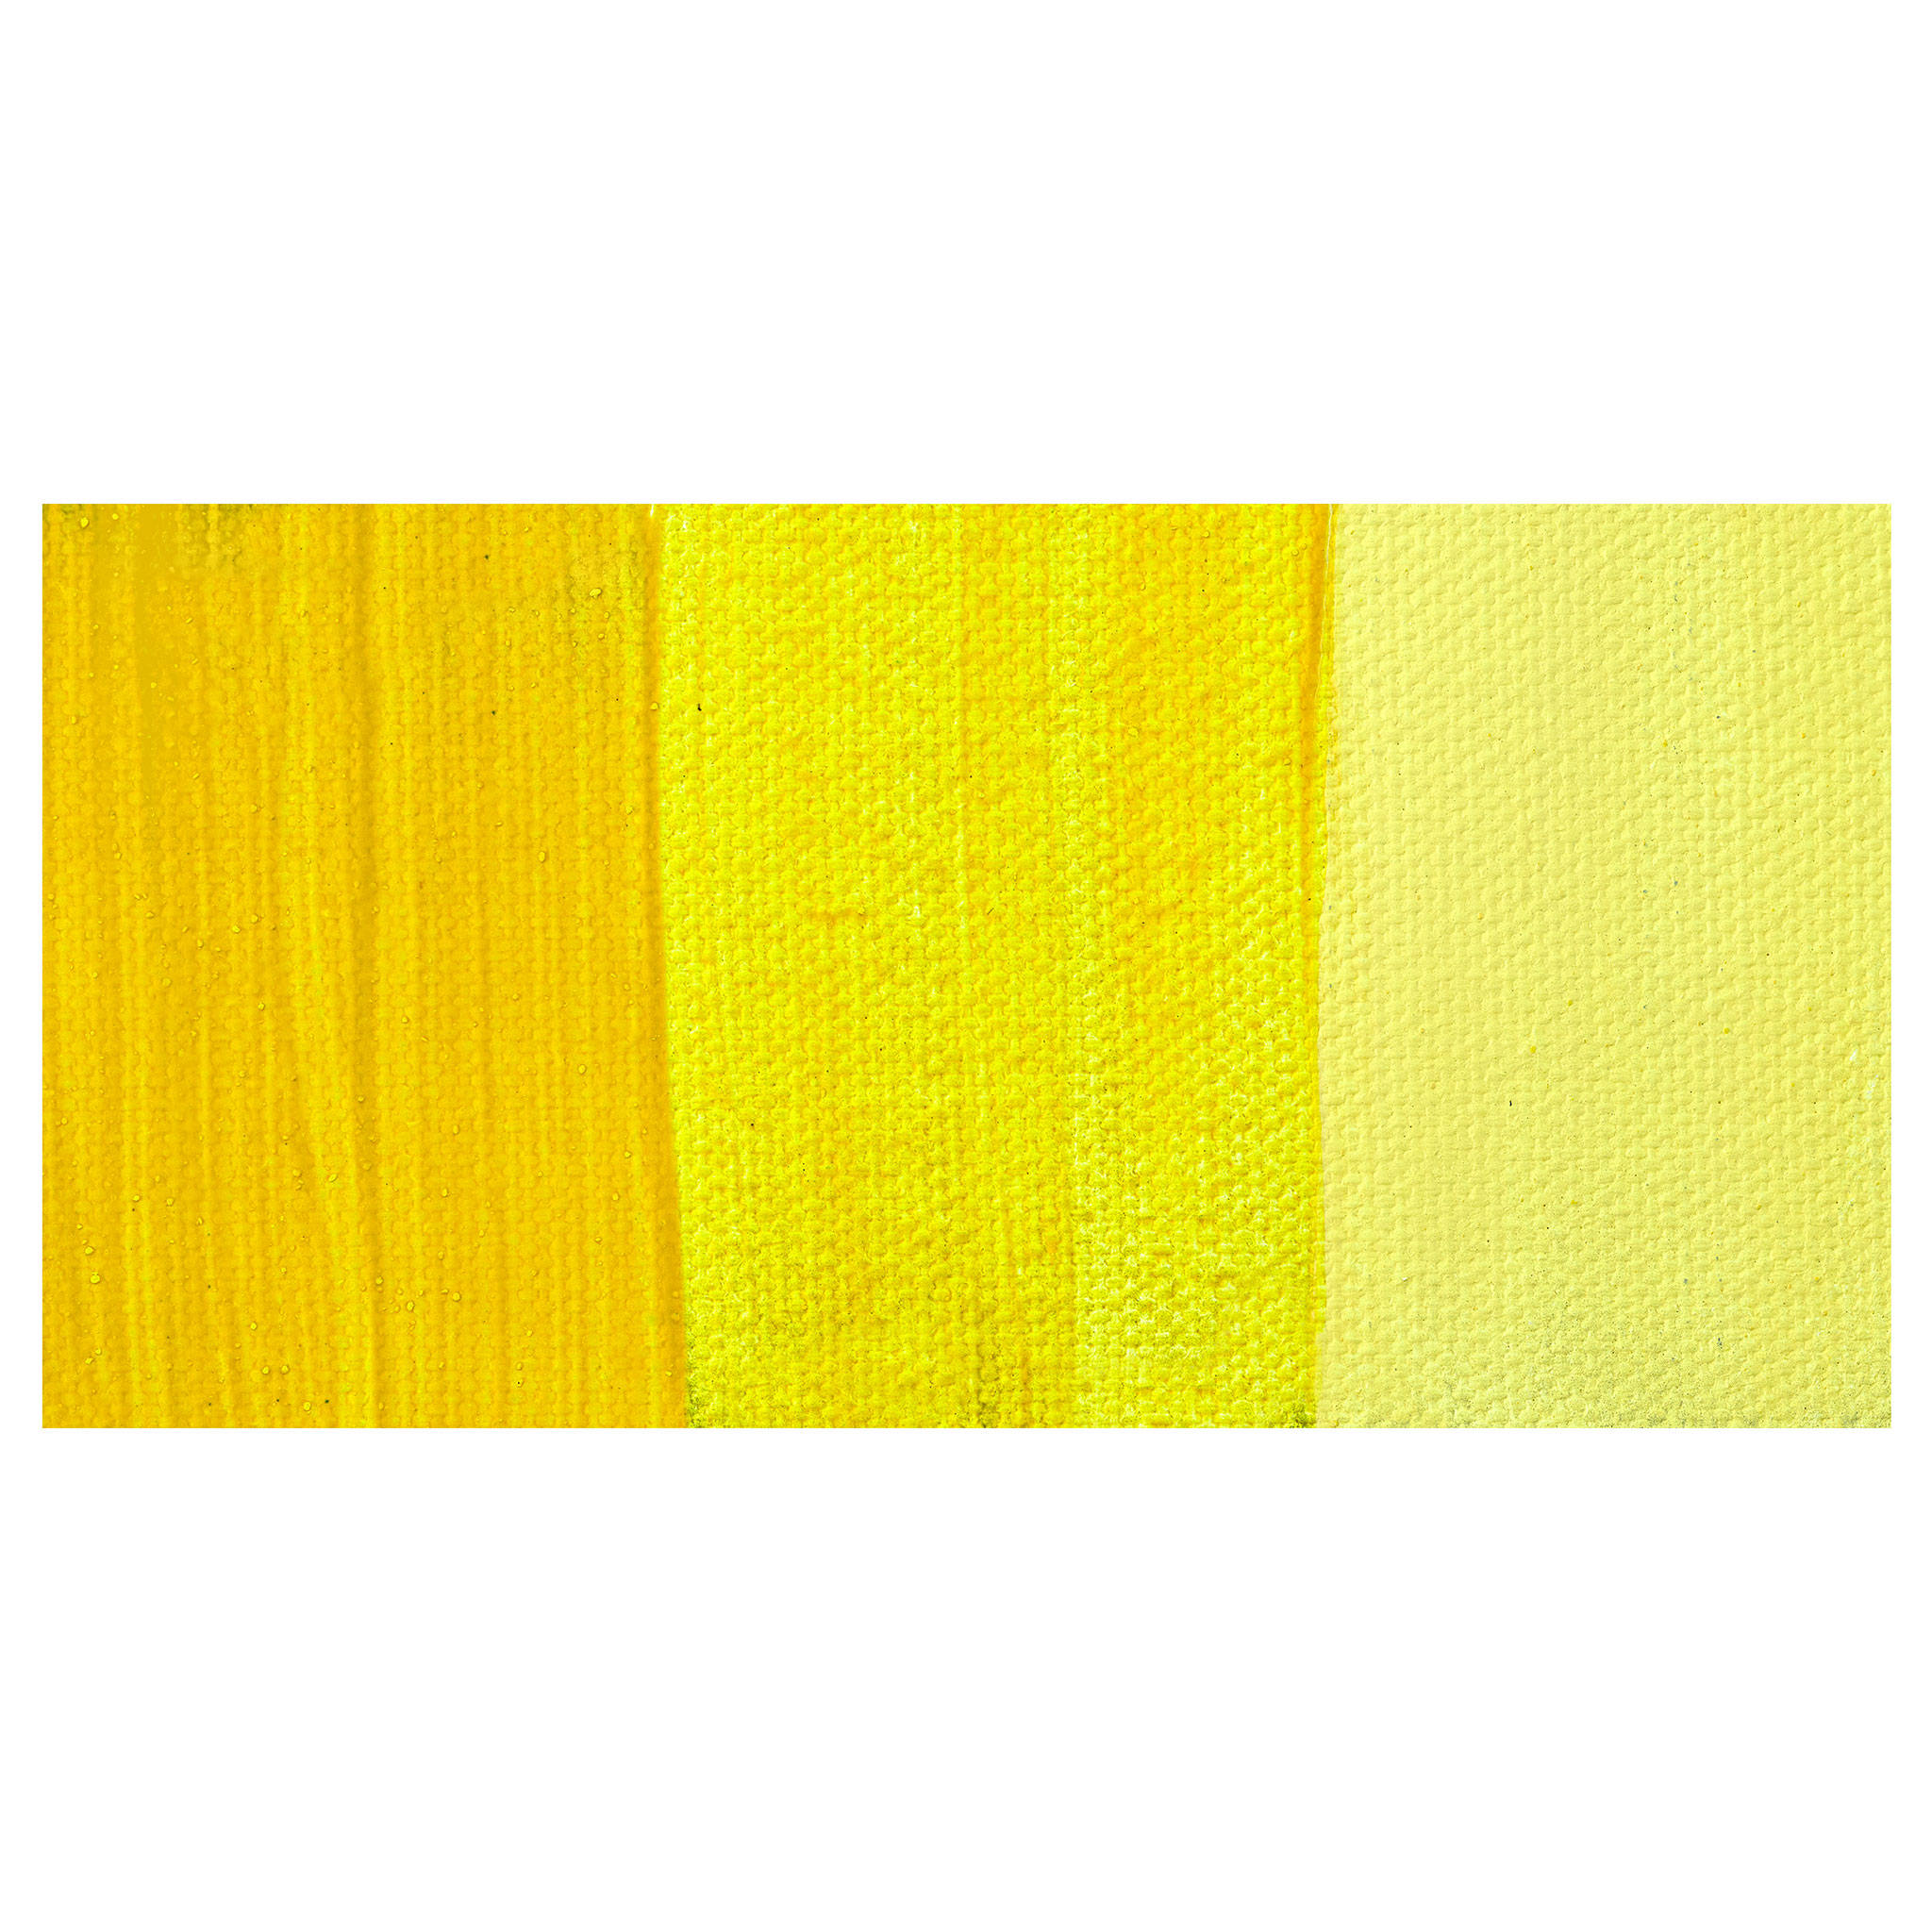 Aureolin yellow  Matisse acrylic paint